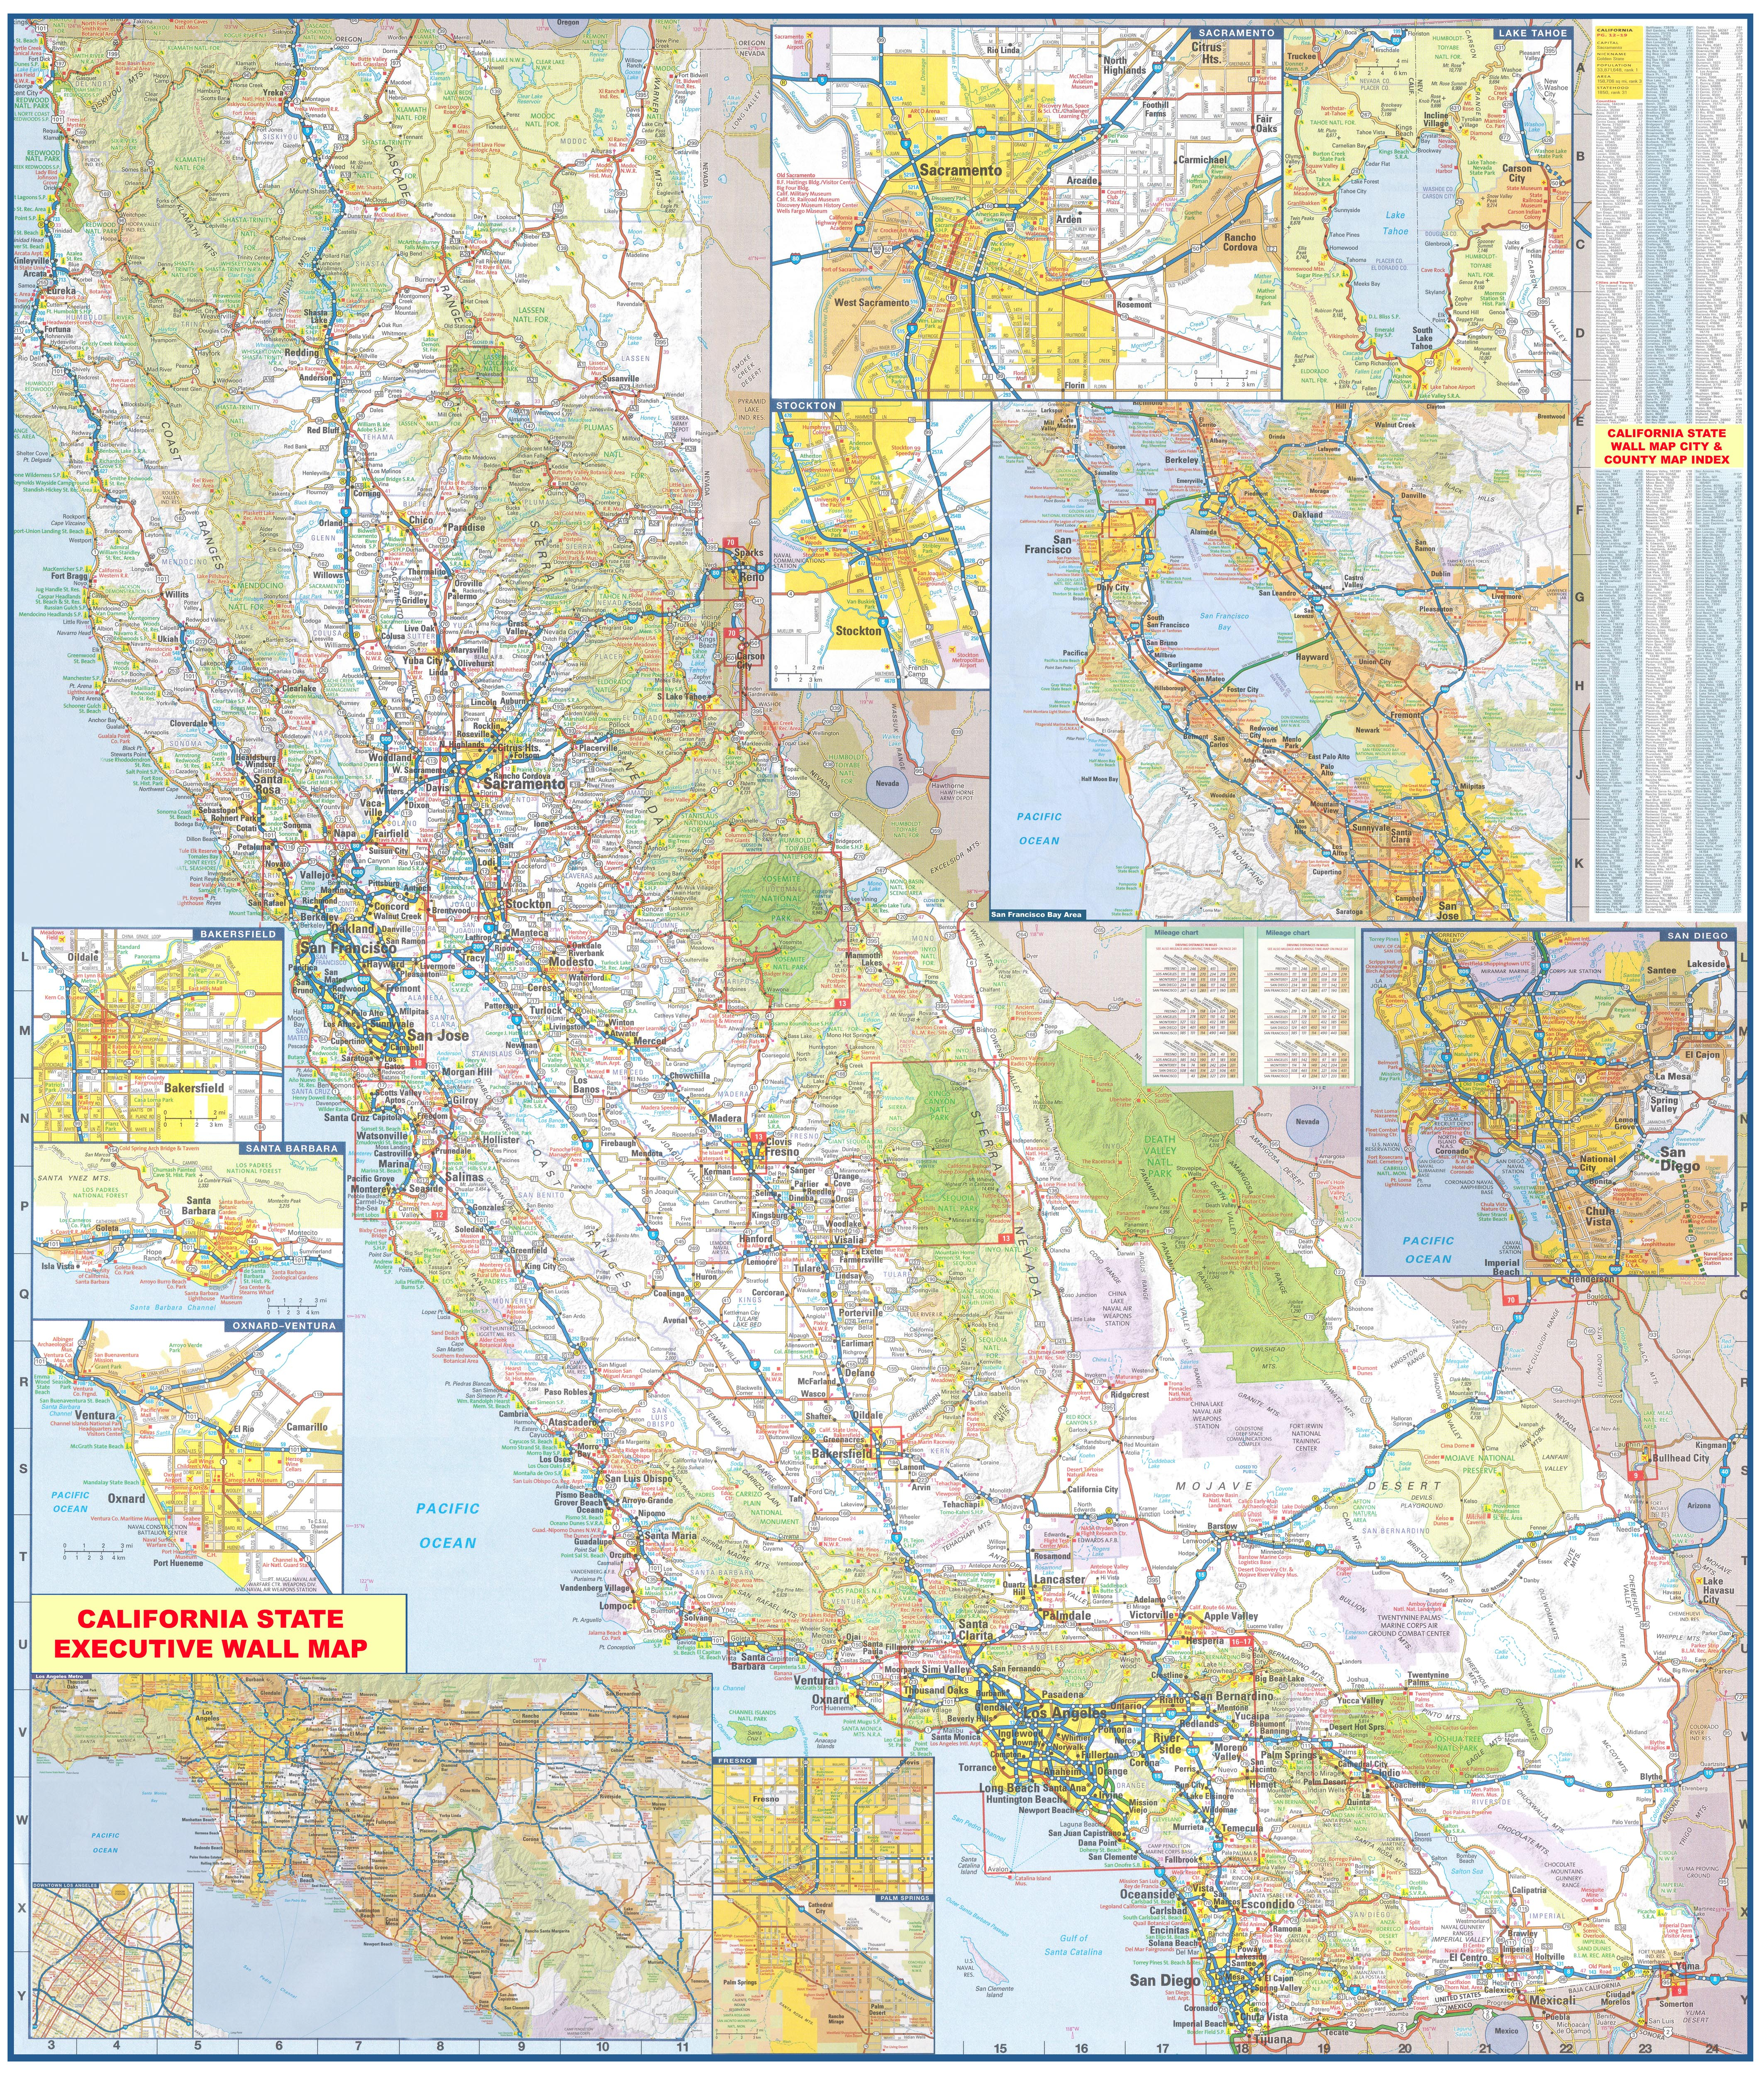 California Wall Map Executive Commercial Edition - Laminated California Wall Map